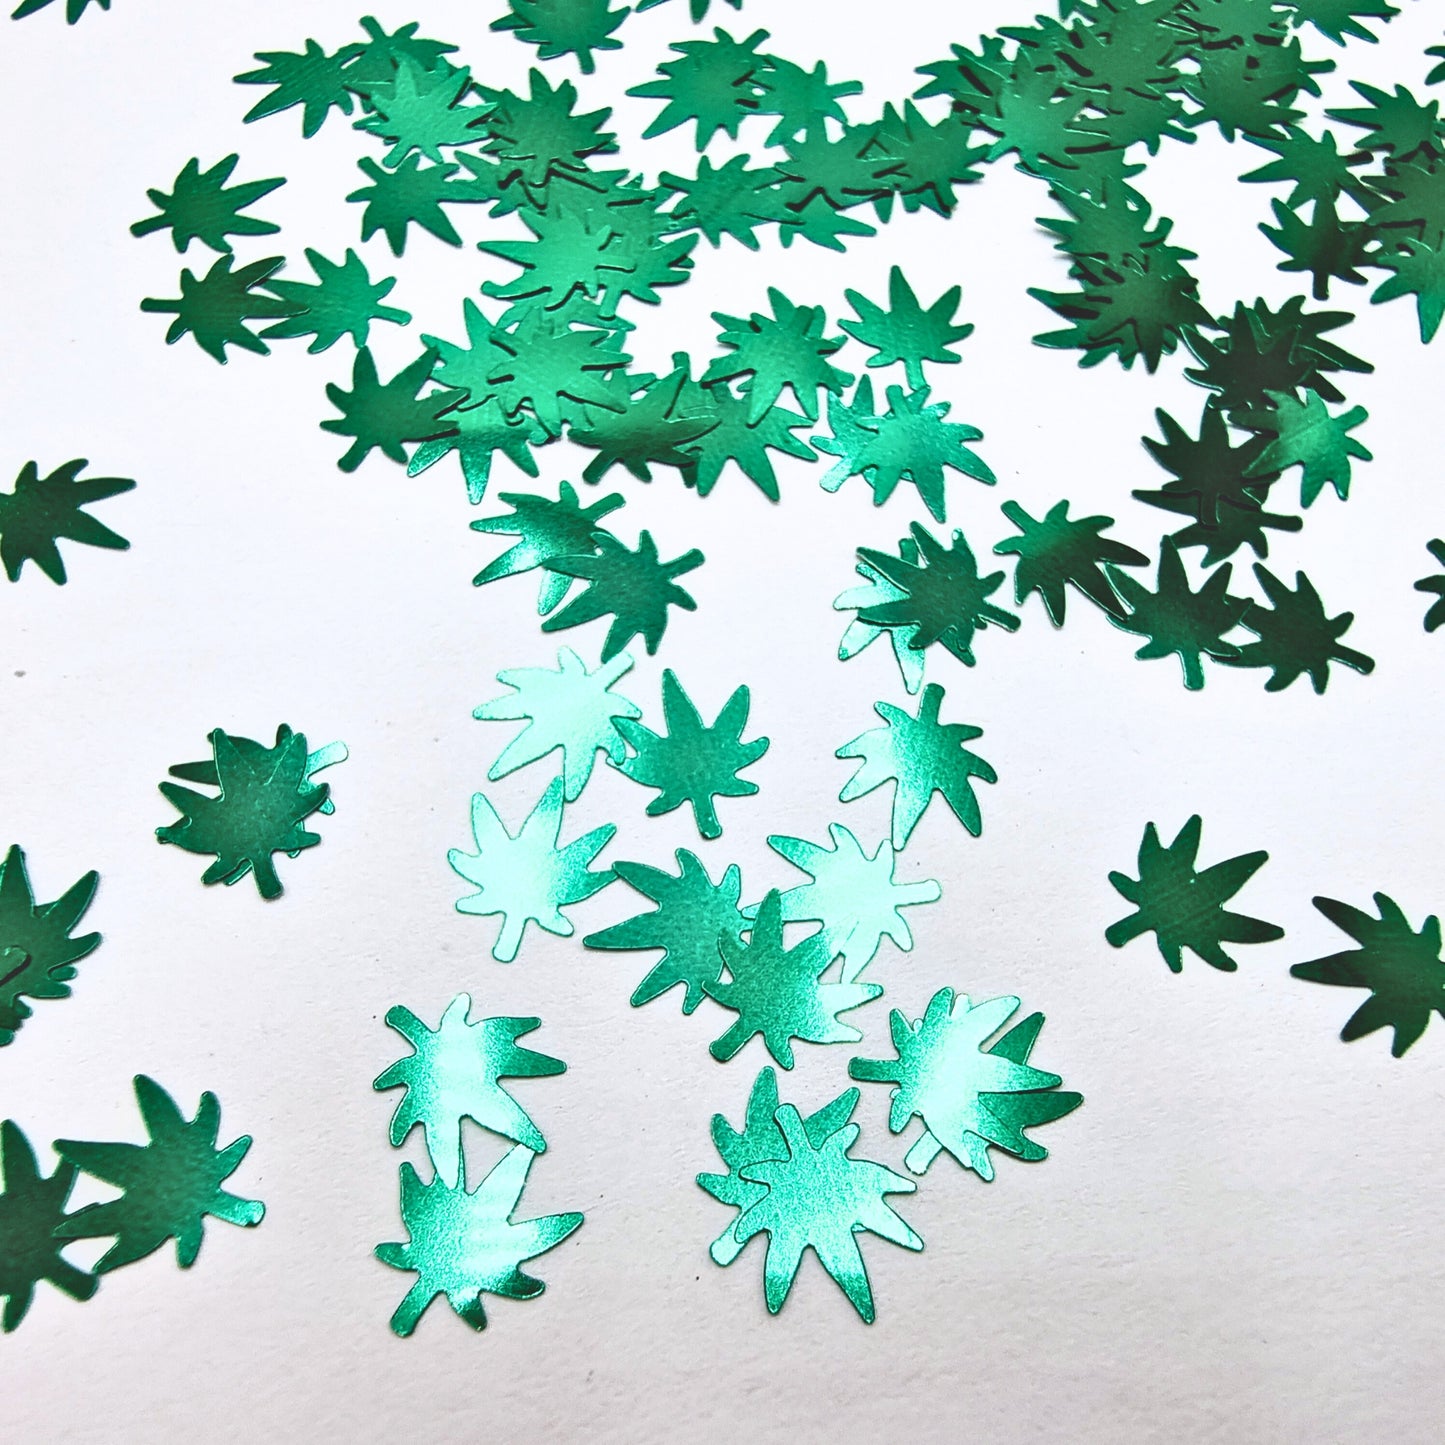 Green Weed Leaves (Marijuana) Glitter/Confetti